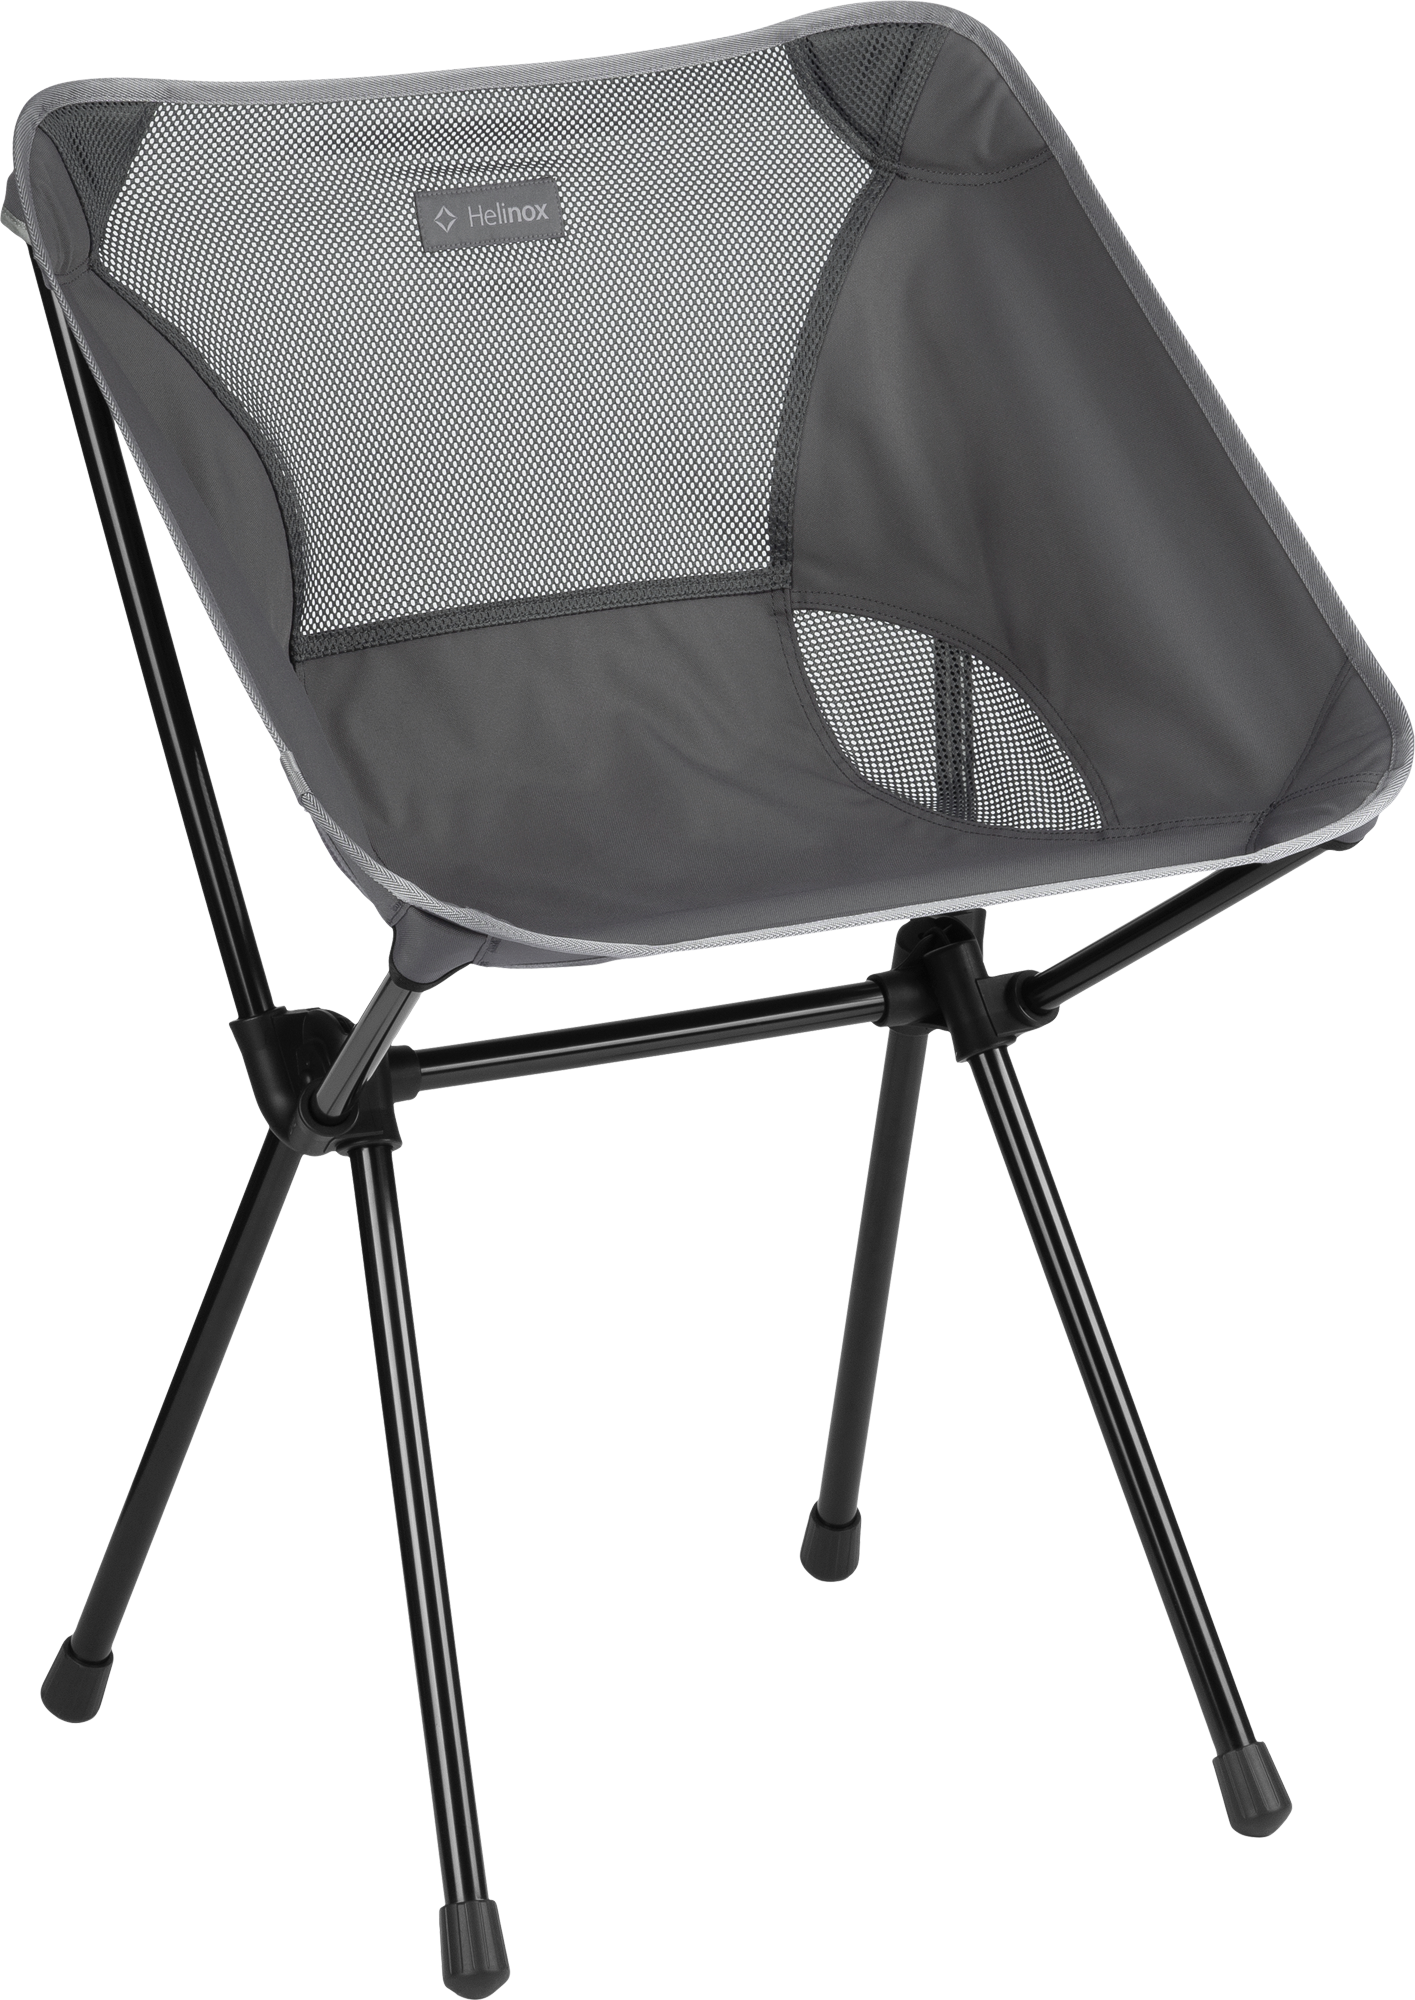 Helinox Cafe Chair Charcoal